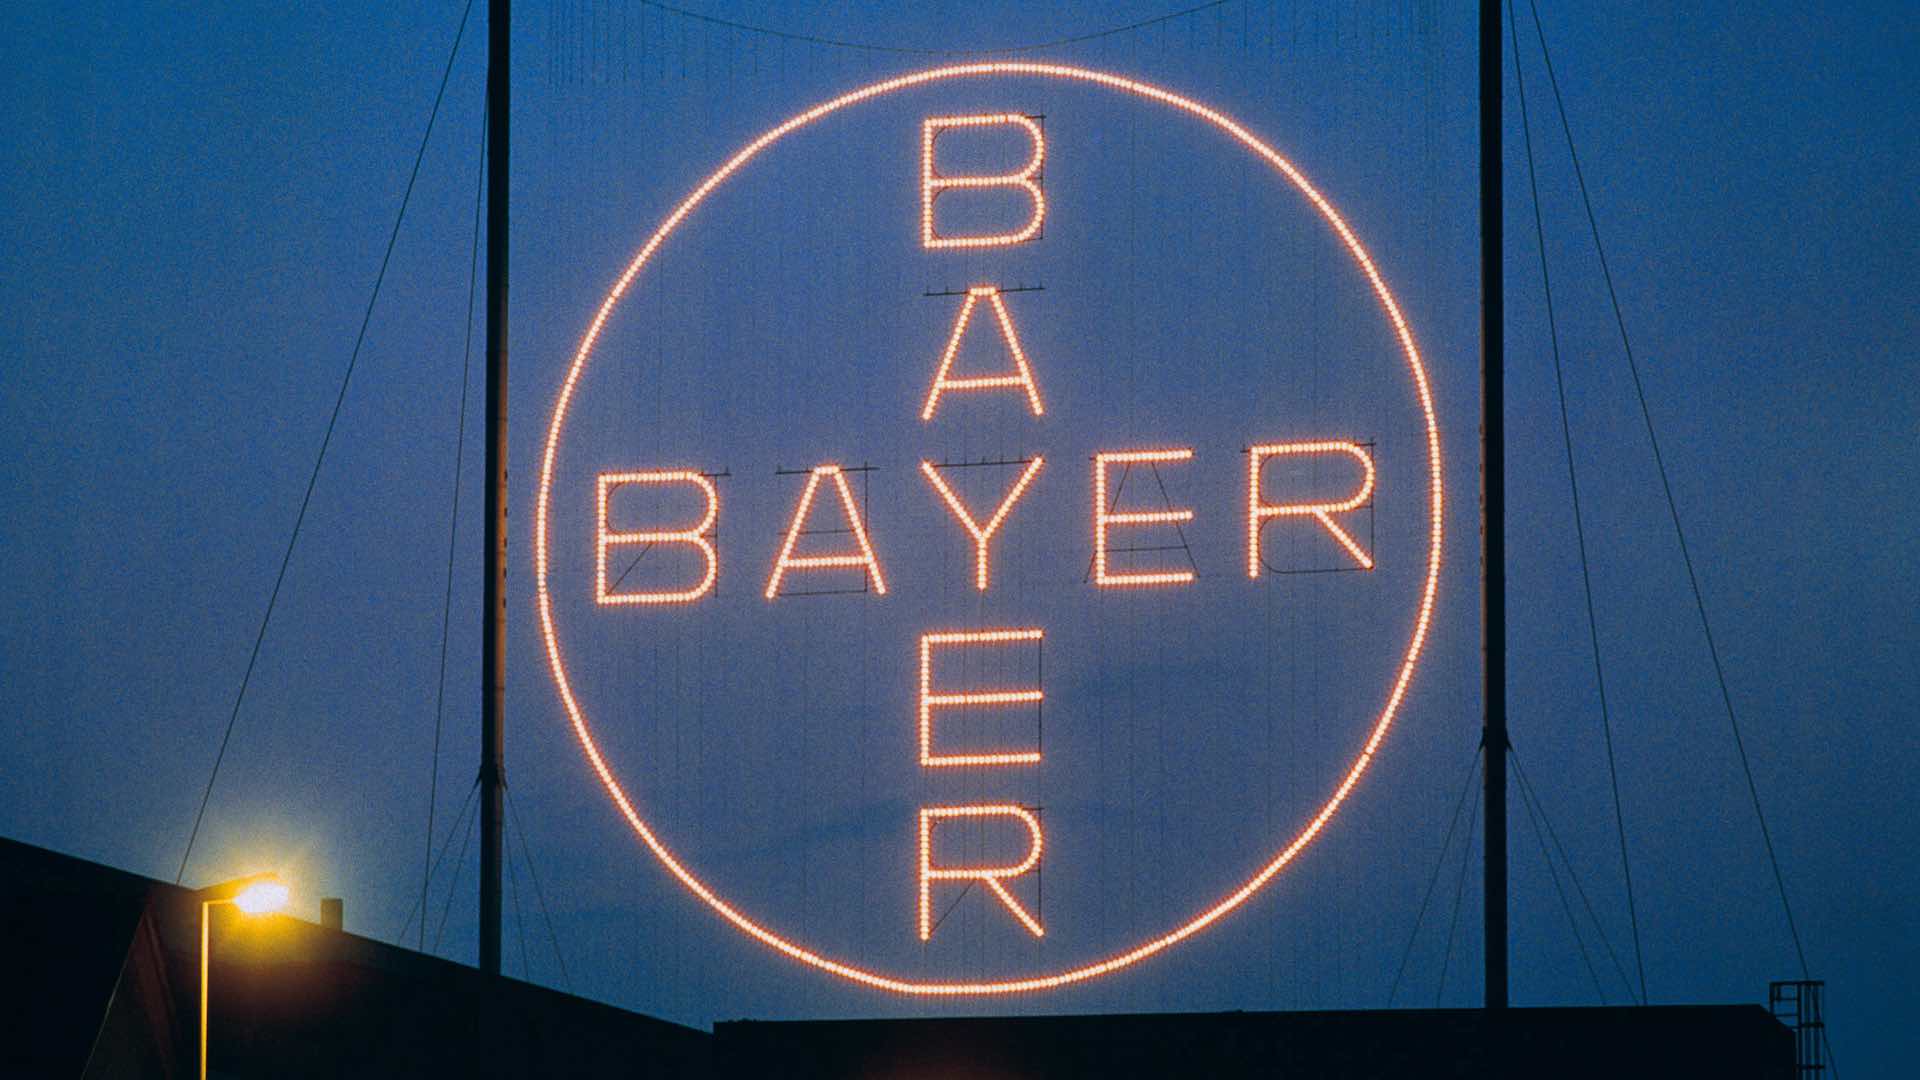 Bayer faces hefty $1.56 billion fine in Roundup cancer lawsuit